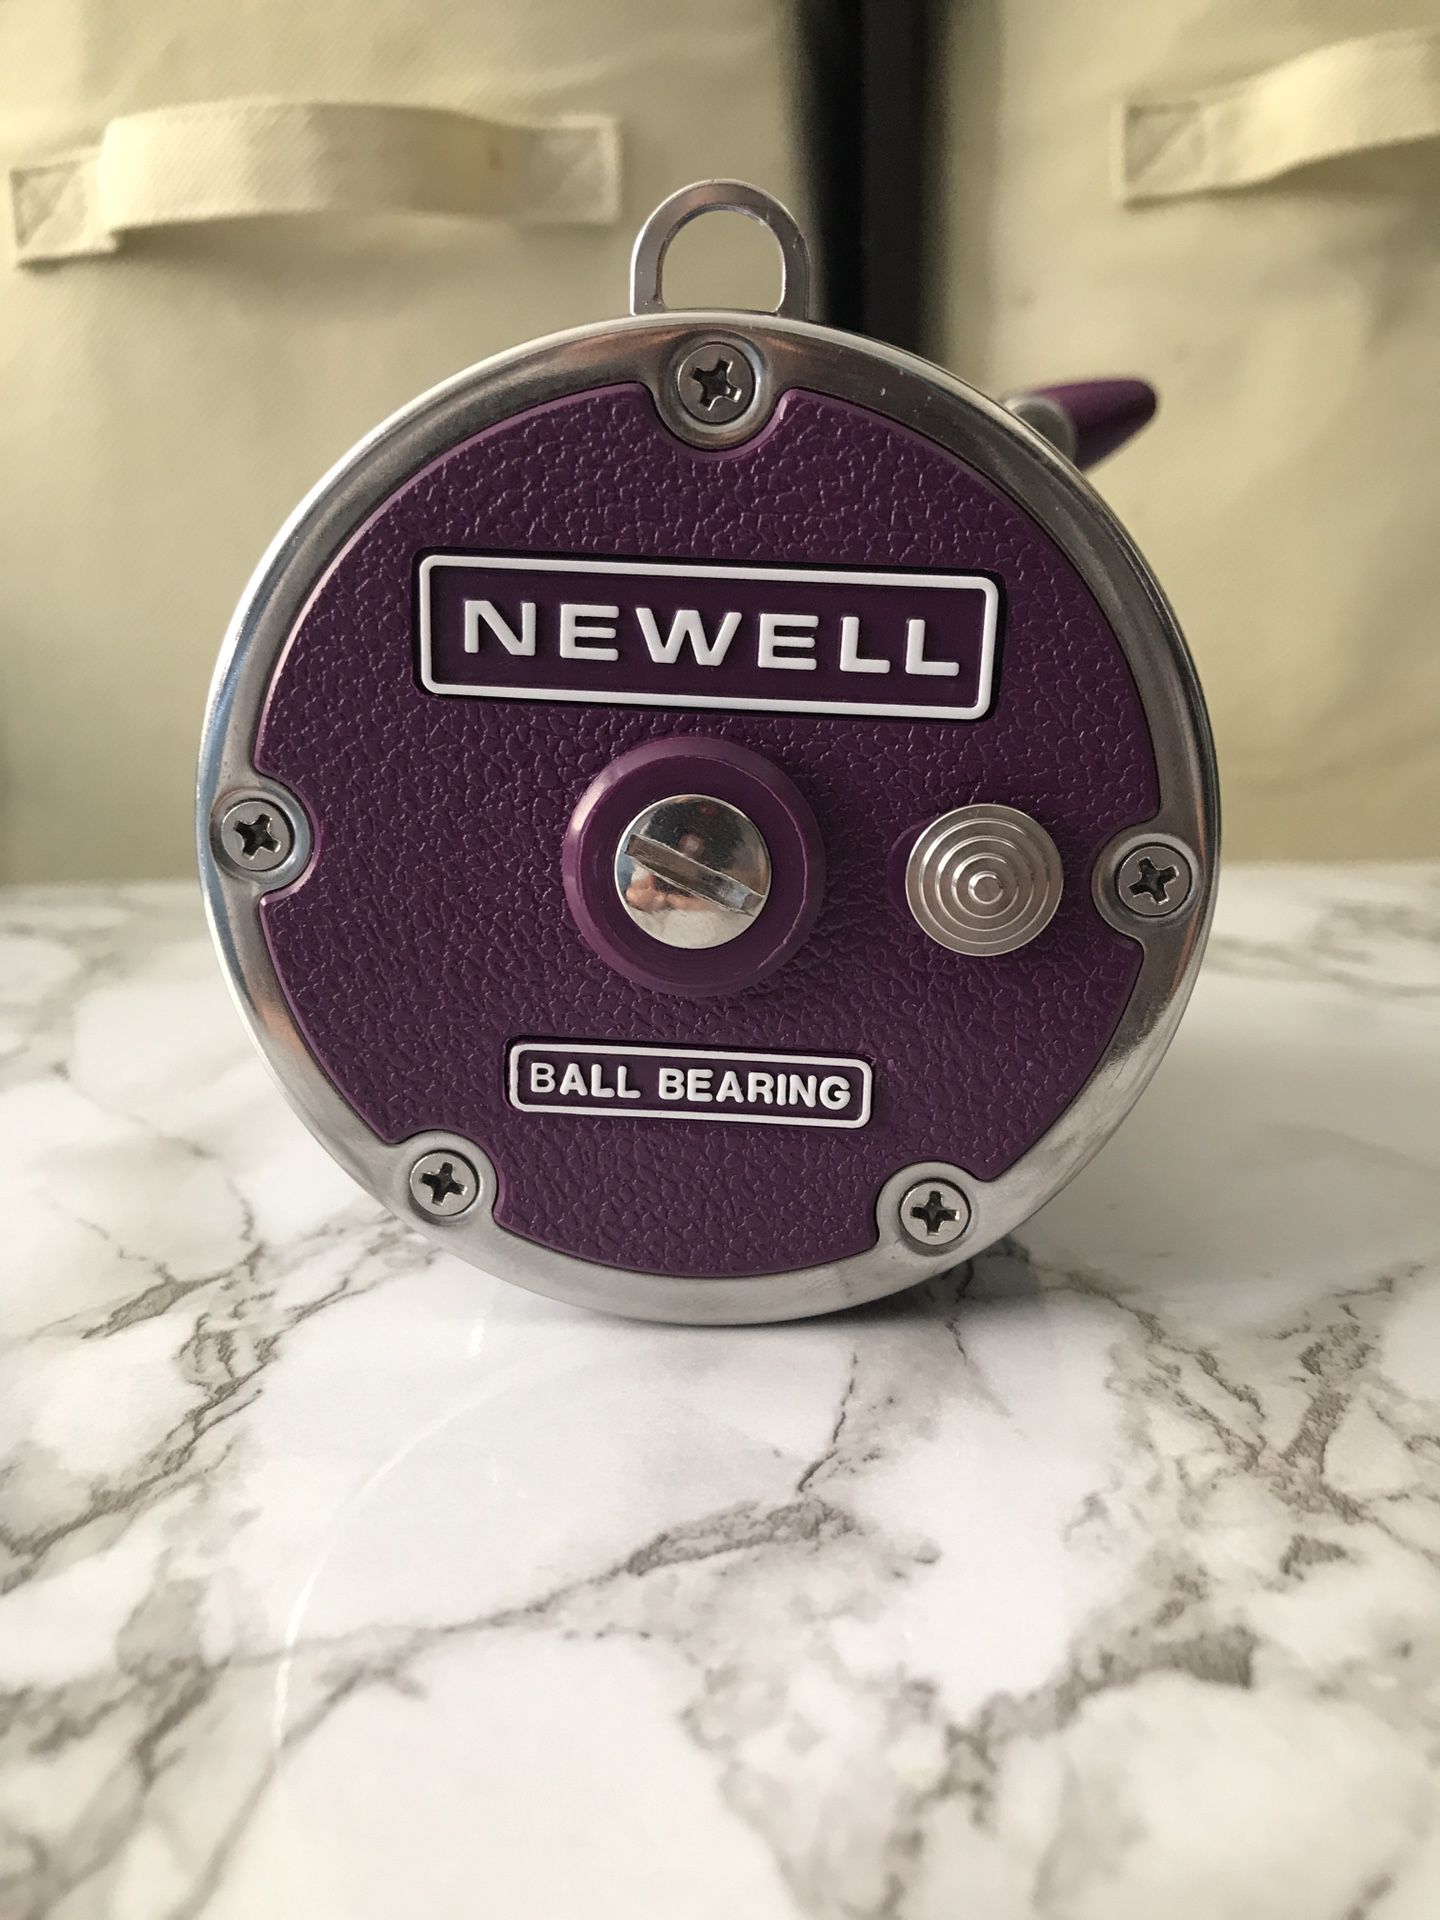 Newell PR454-5 Reel for Sale in Wahiawa, HI - OfferUp